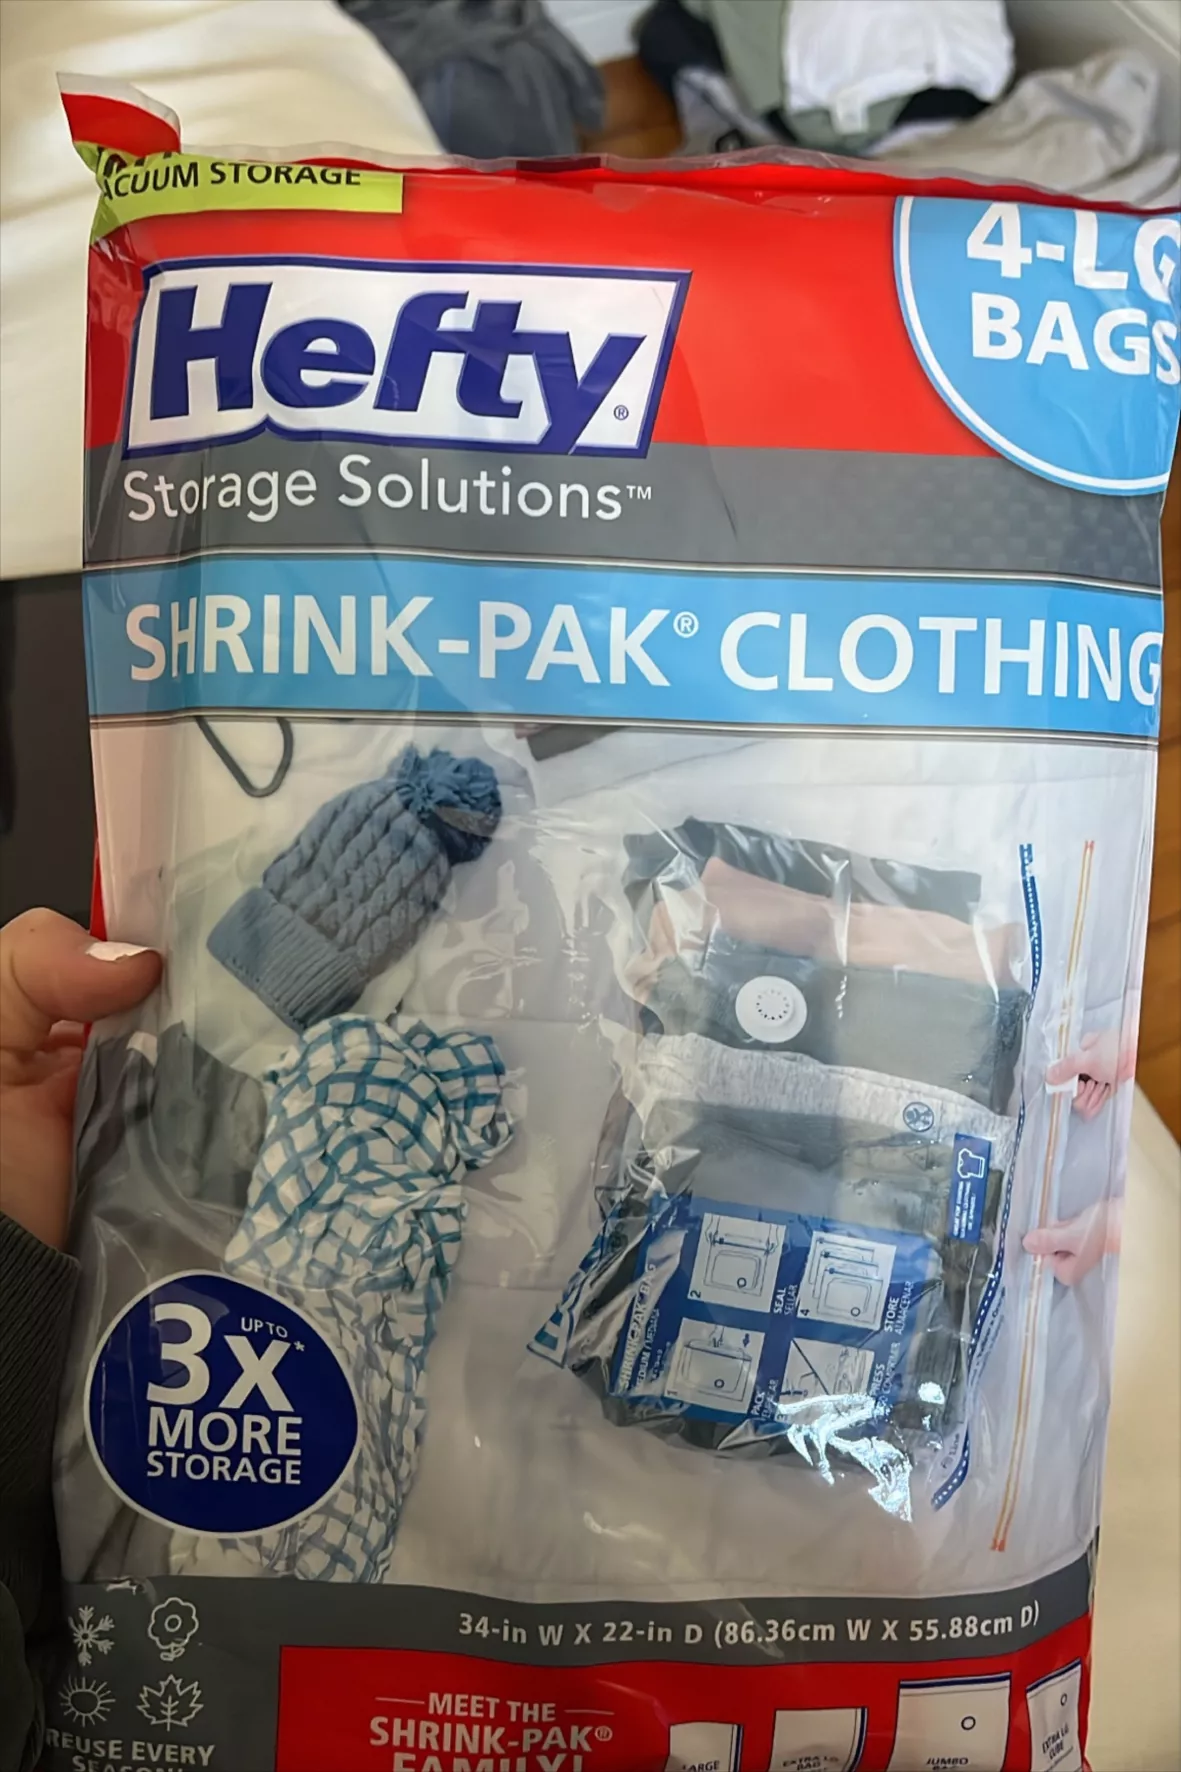 Hefty Shrink-Pak 6 Large Vacuum Storage Bags